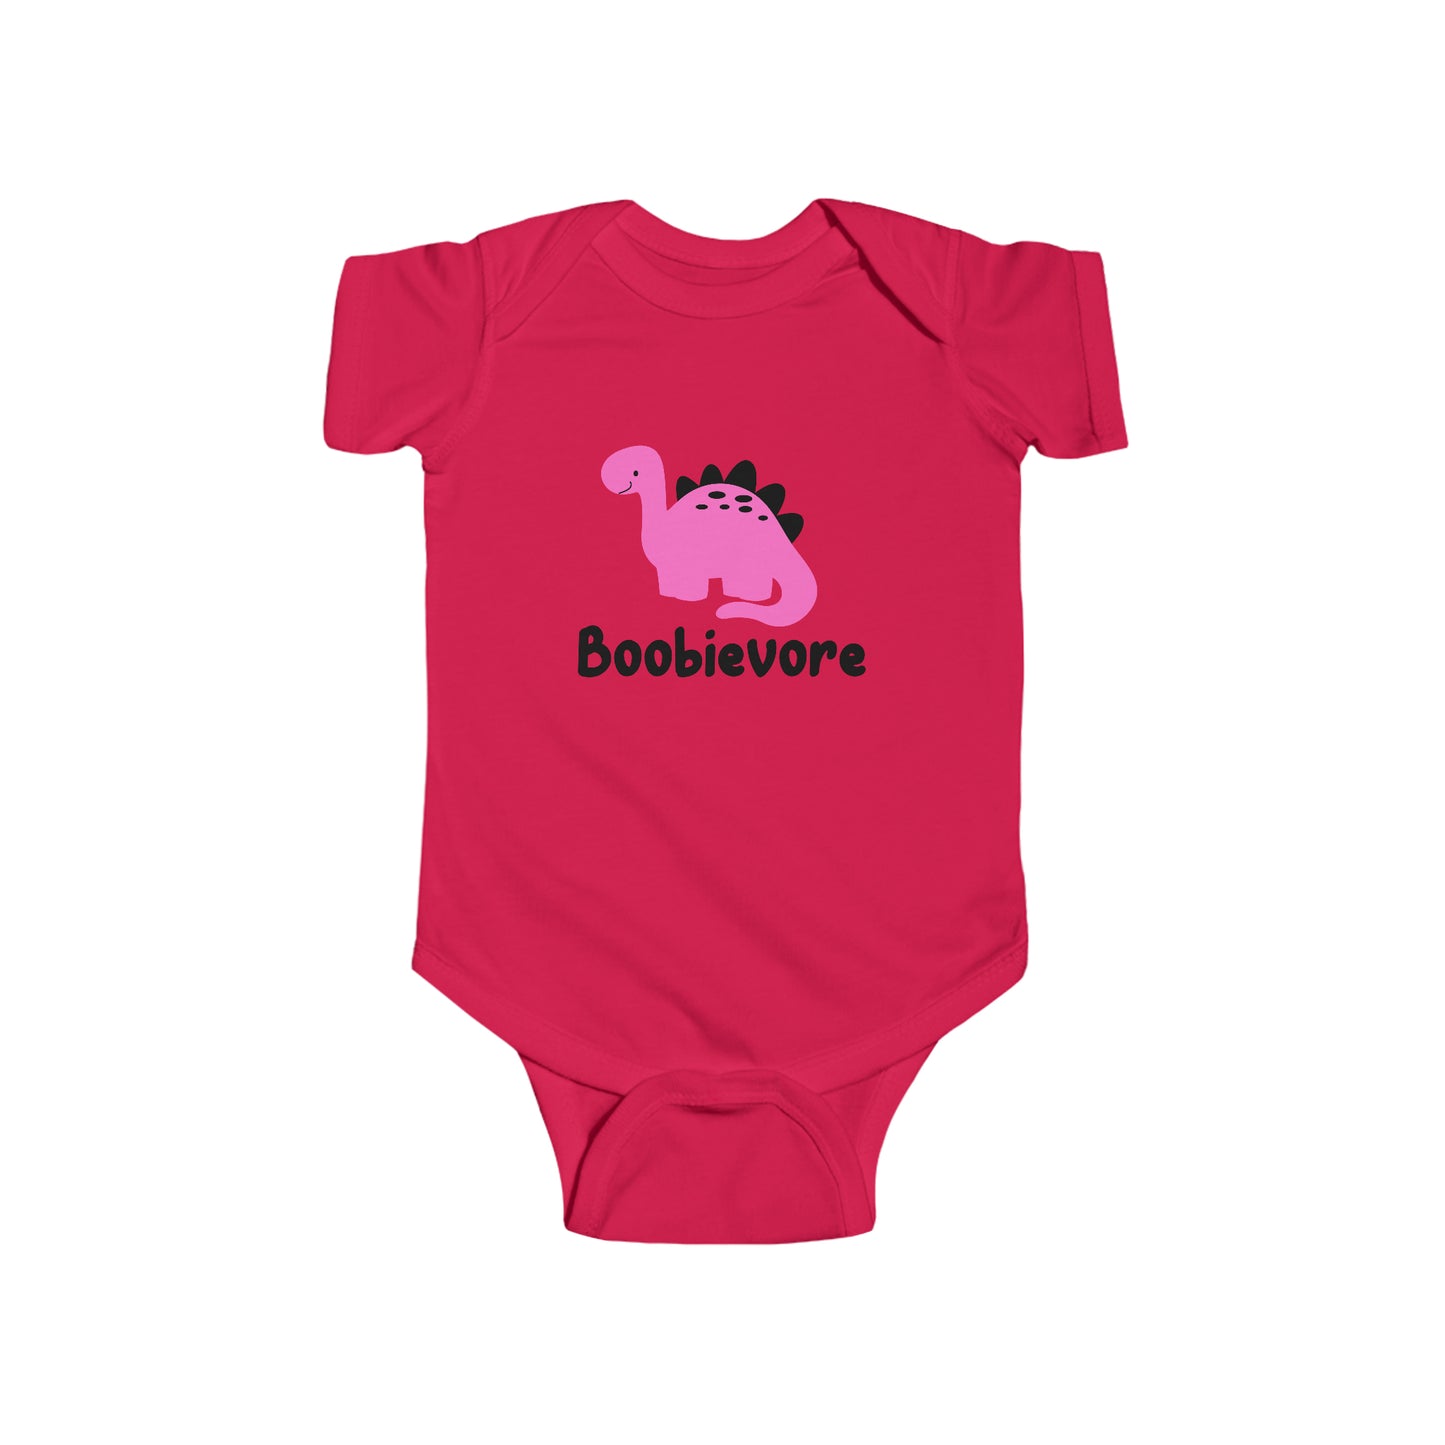 Boobievore - Breast Cancer Awareness Bodysuit, Onesie, Infant Fine Jersey Bodysuit